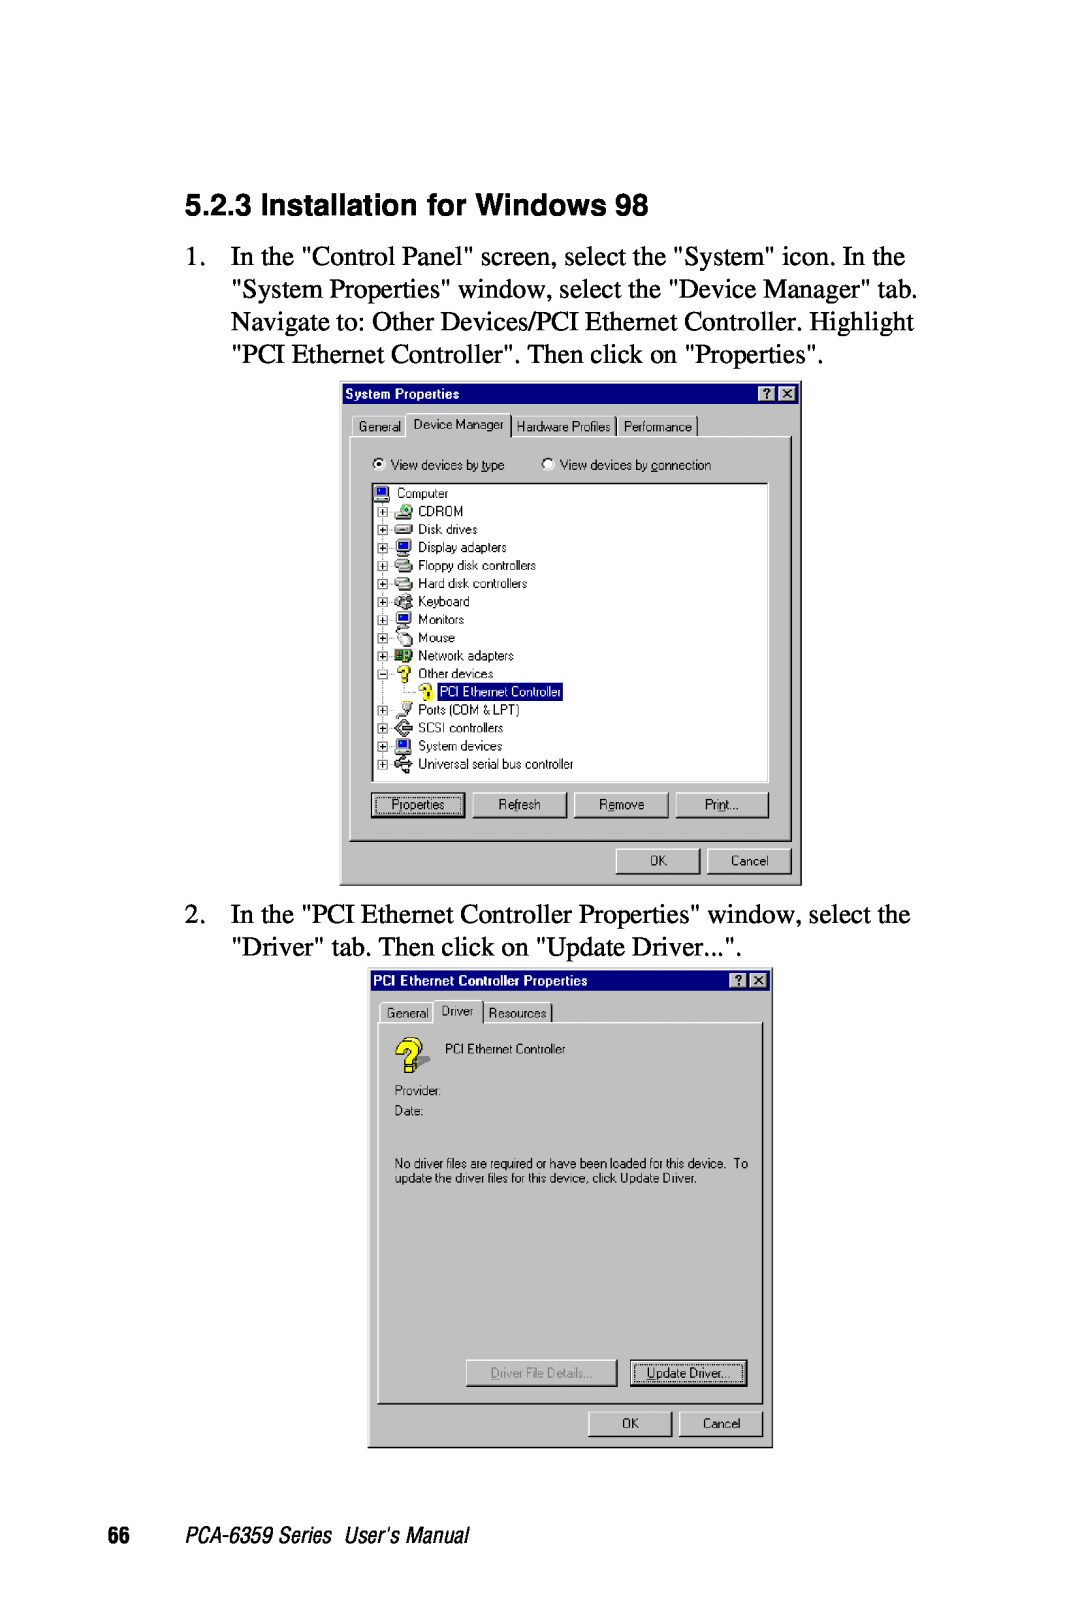 Advantech user manual Installation for Windows, PCA-6359 Series Users Manual 